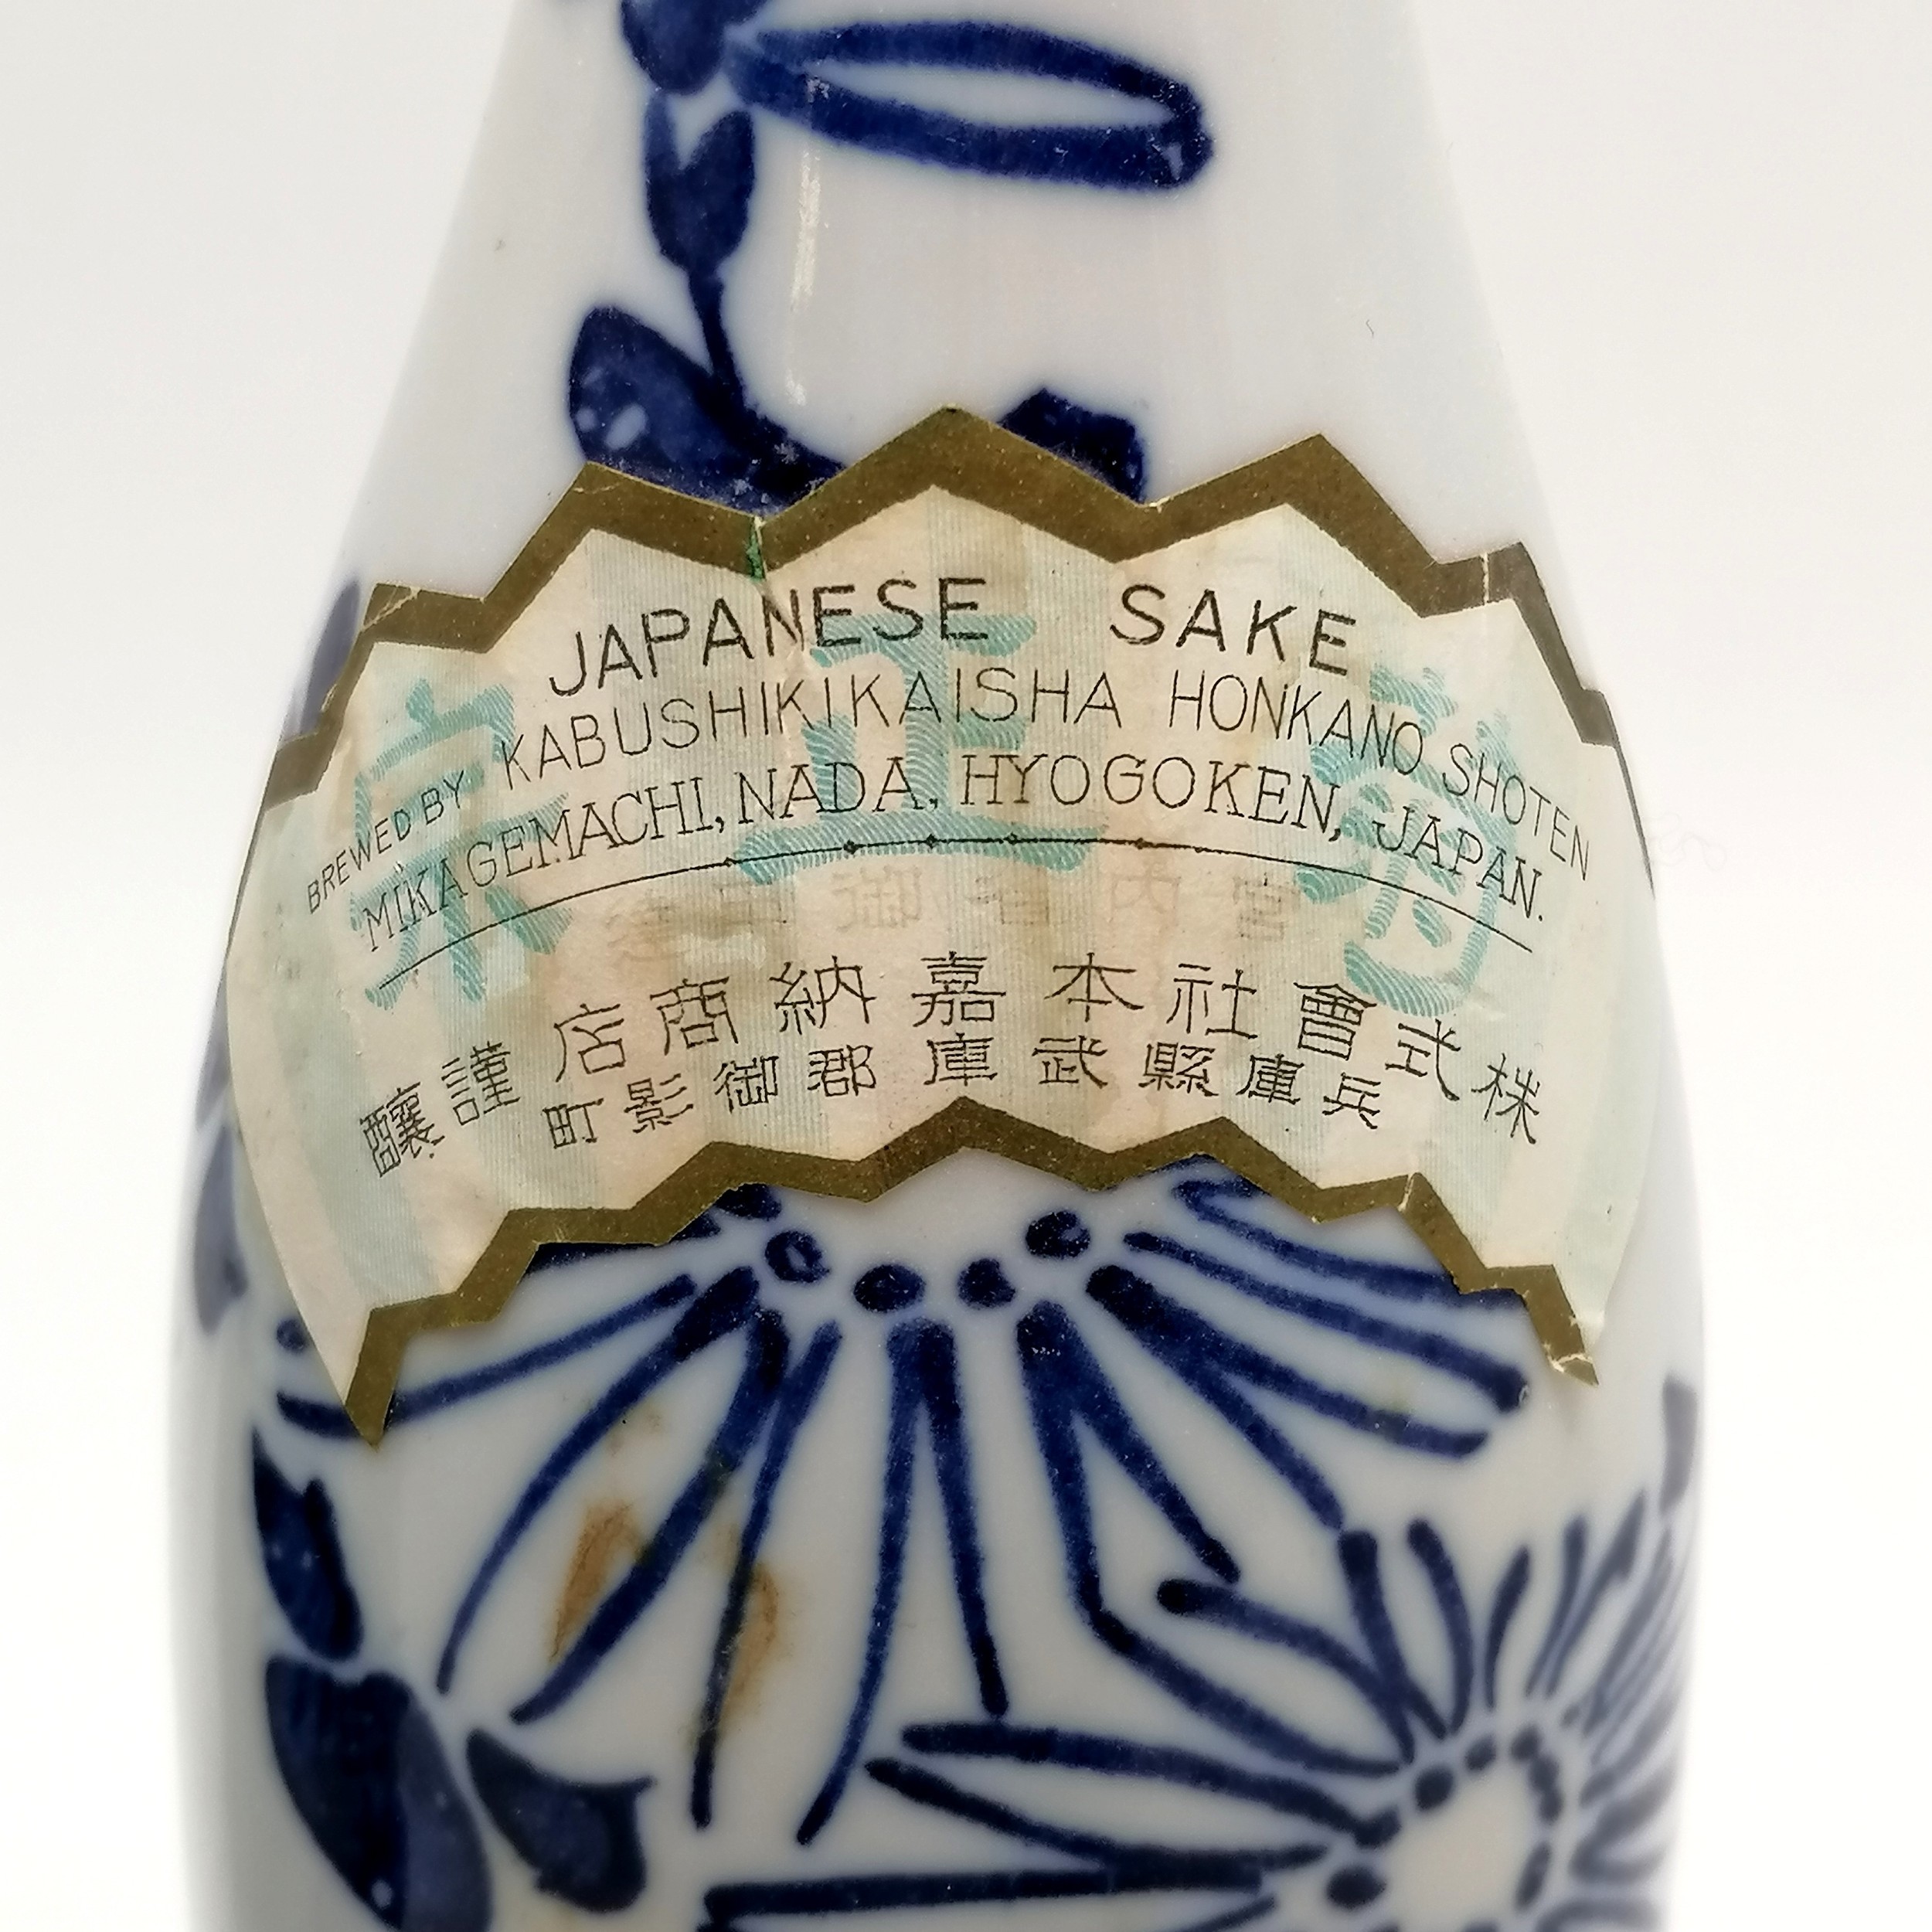 Pair of (empty) vintage Sake bottles - 1 with original label & 29cm high - Image 2 of 2